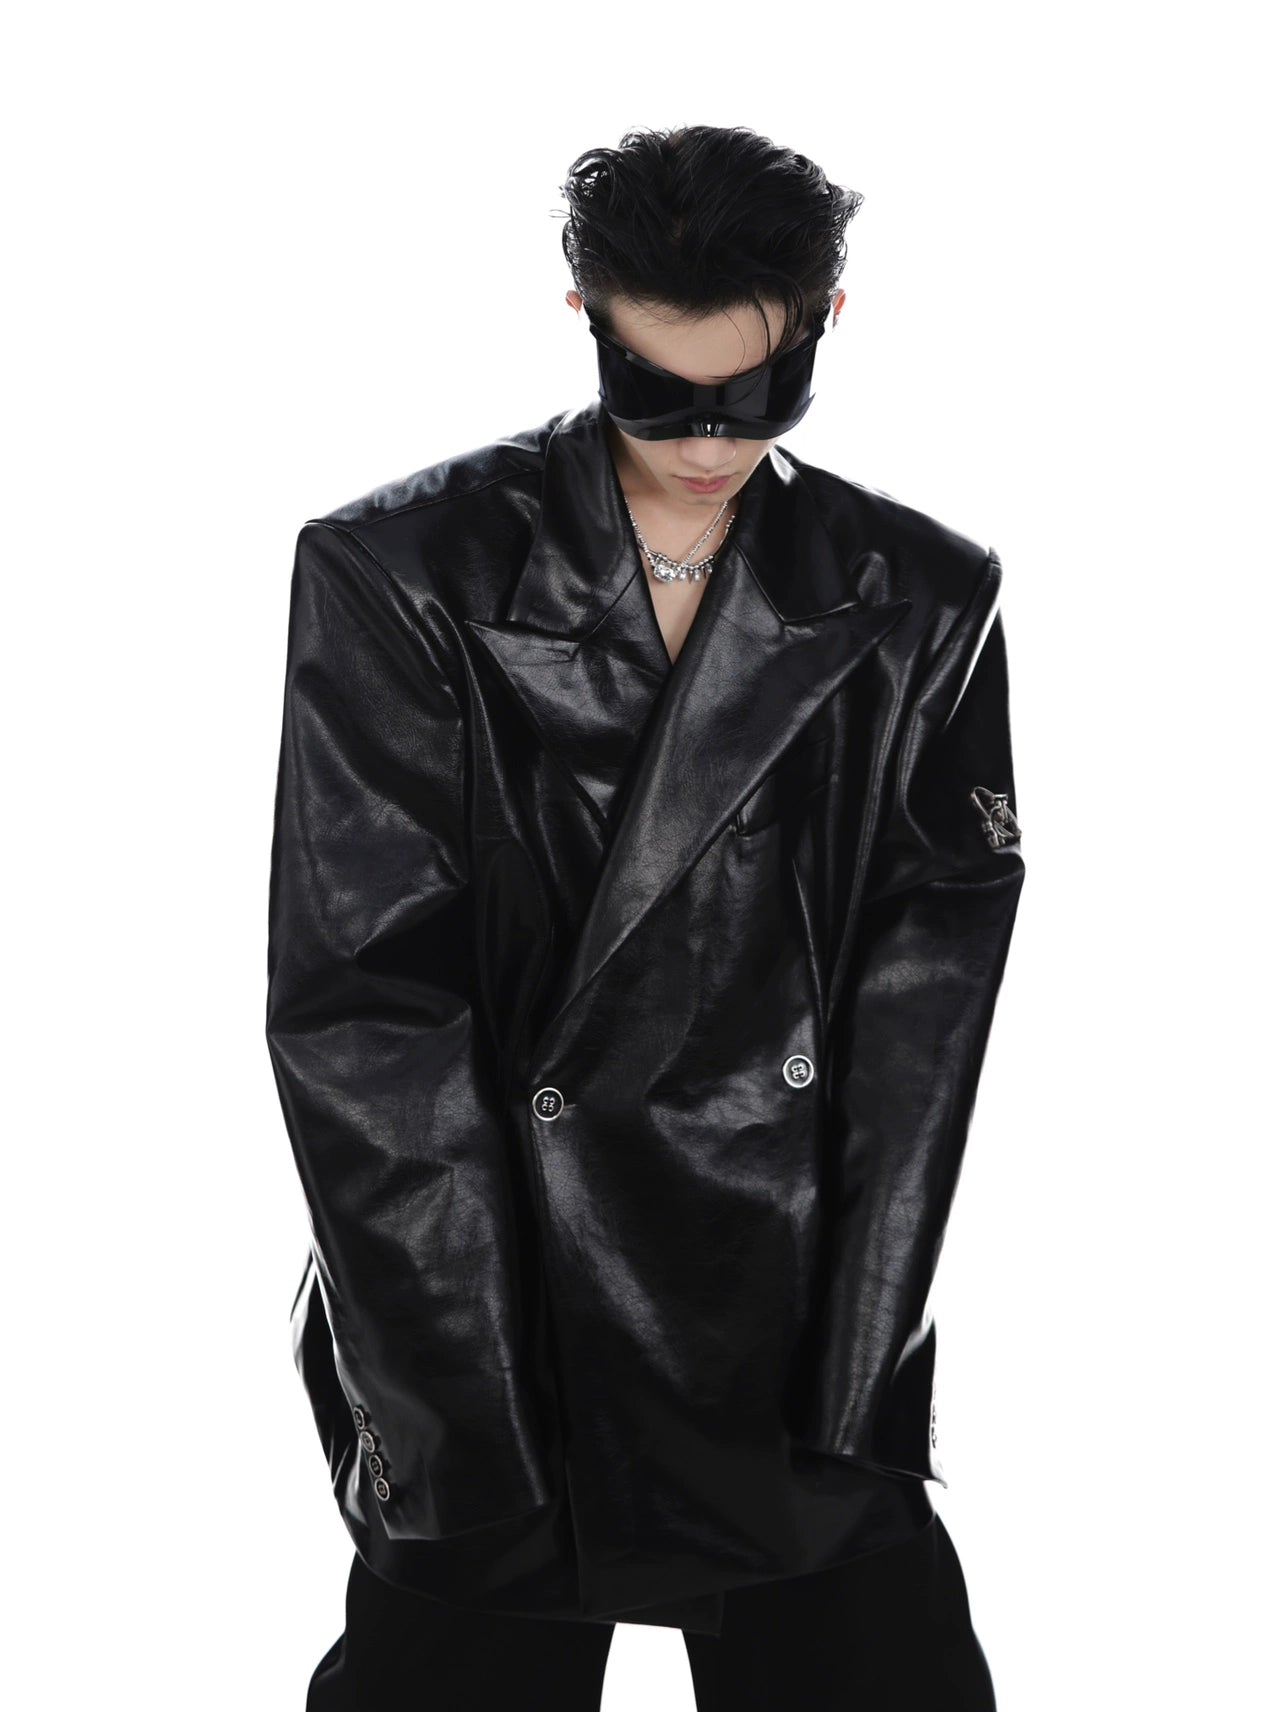 CulturE Spring Niche Three-dimensional Shoulder Pads PU Leather Suit Metal Logo Design Silhouette Blazer Leather Jacket Men